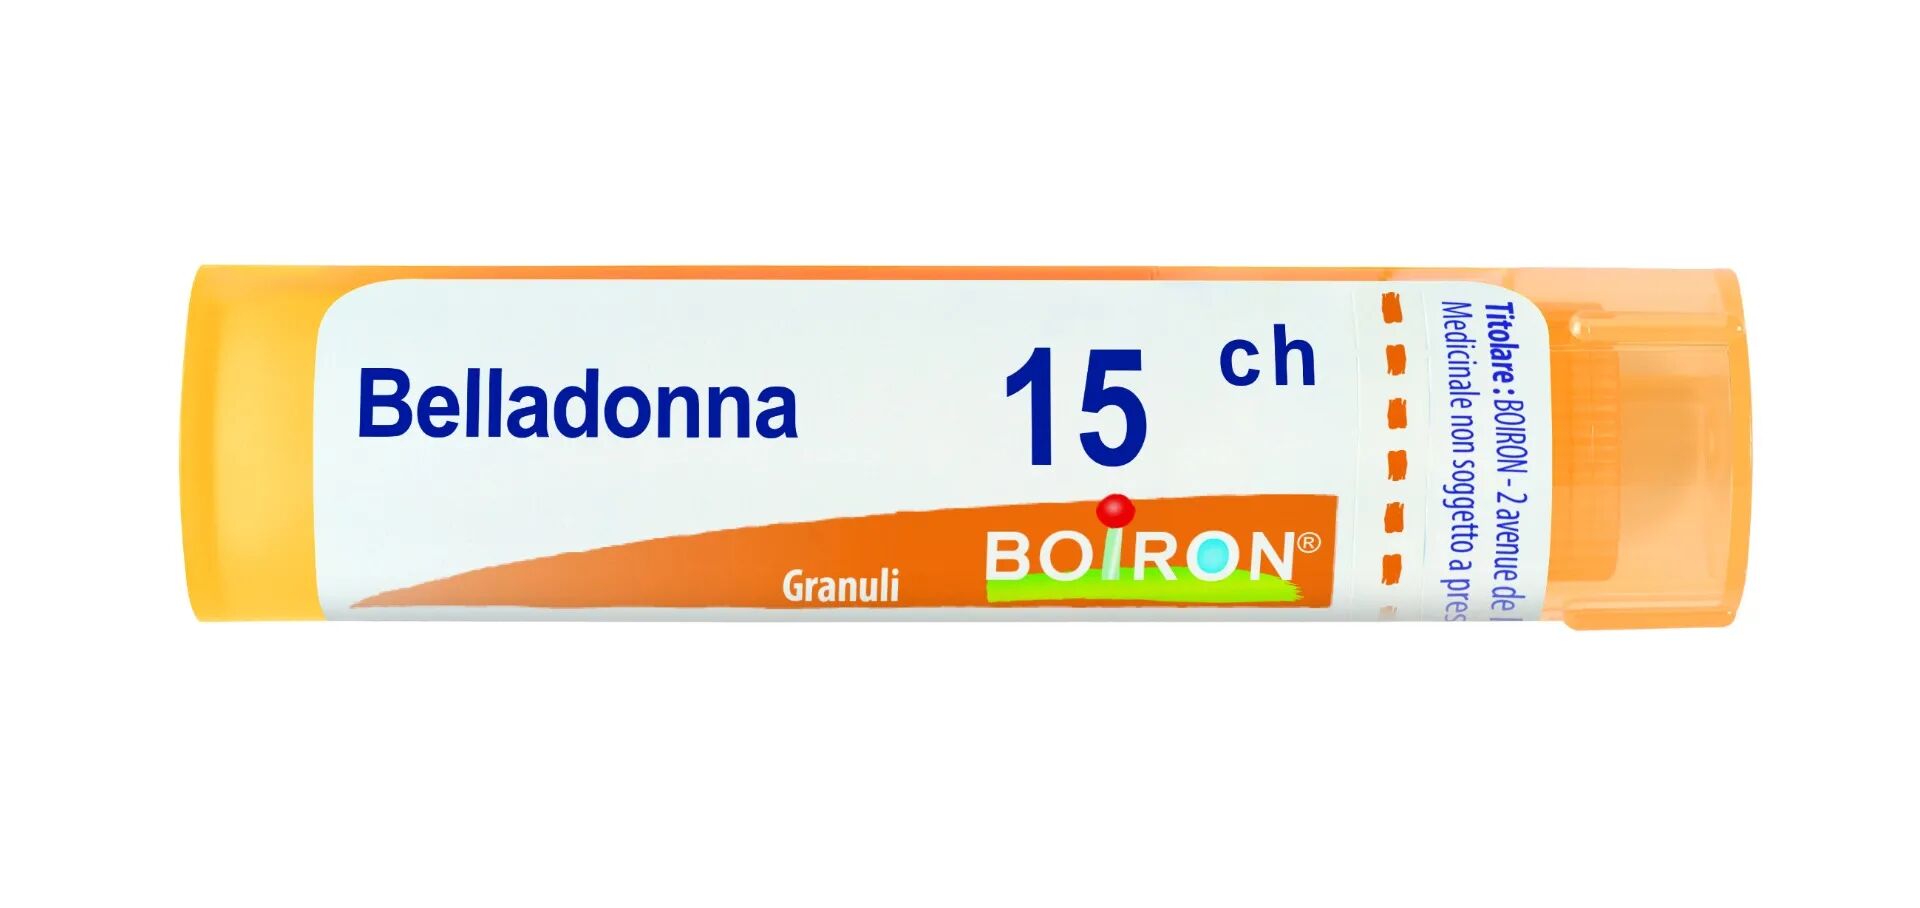 Boiron Belladonna 15 CH Granuli Tubo